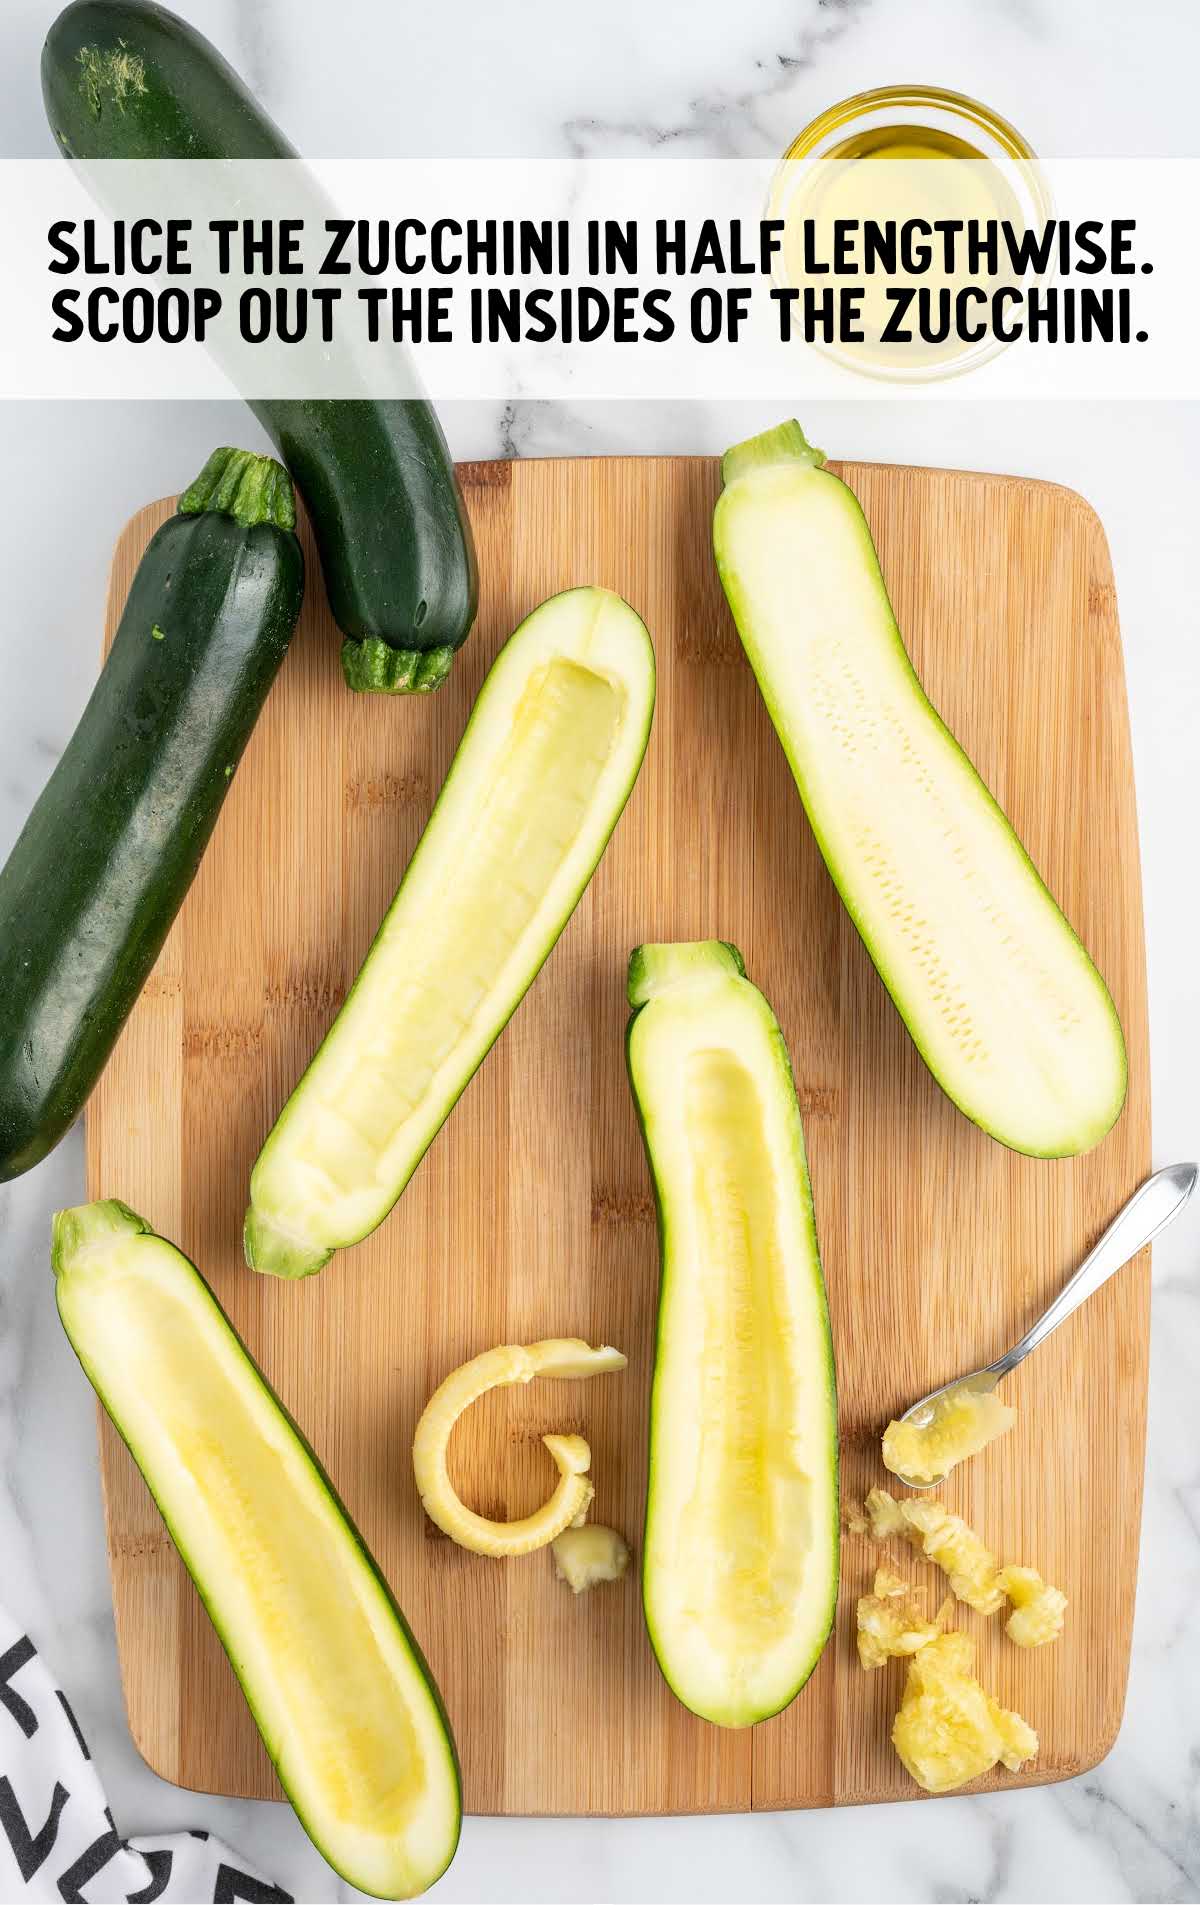 zucchini sliced in half on a wooden board